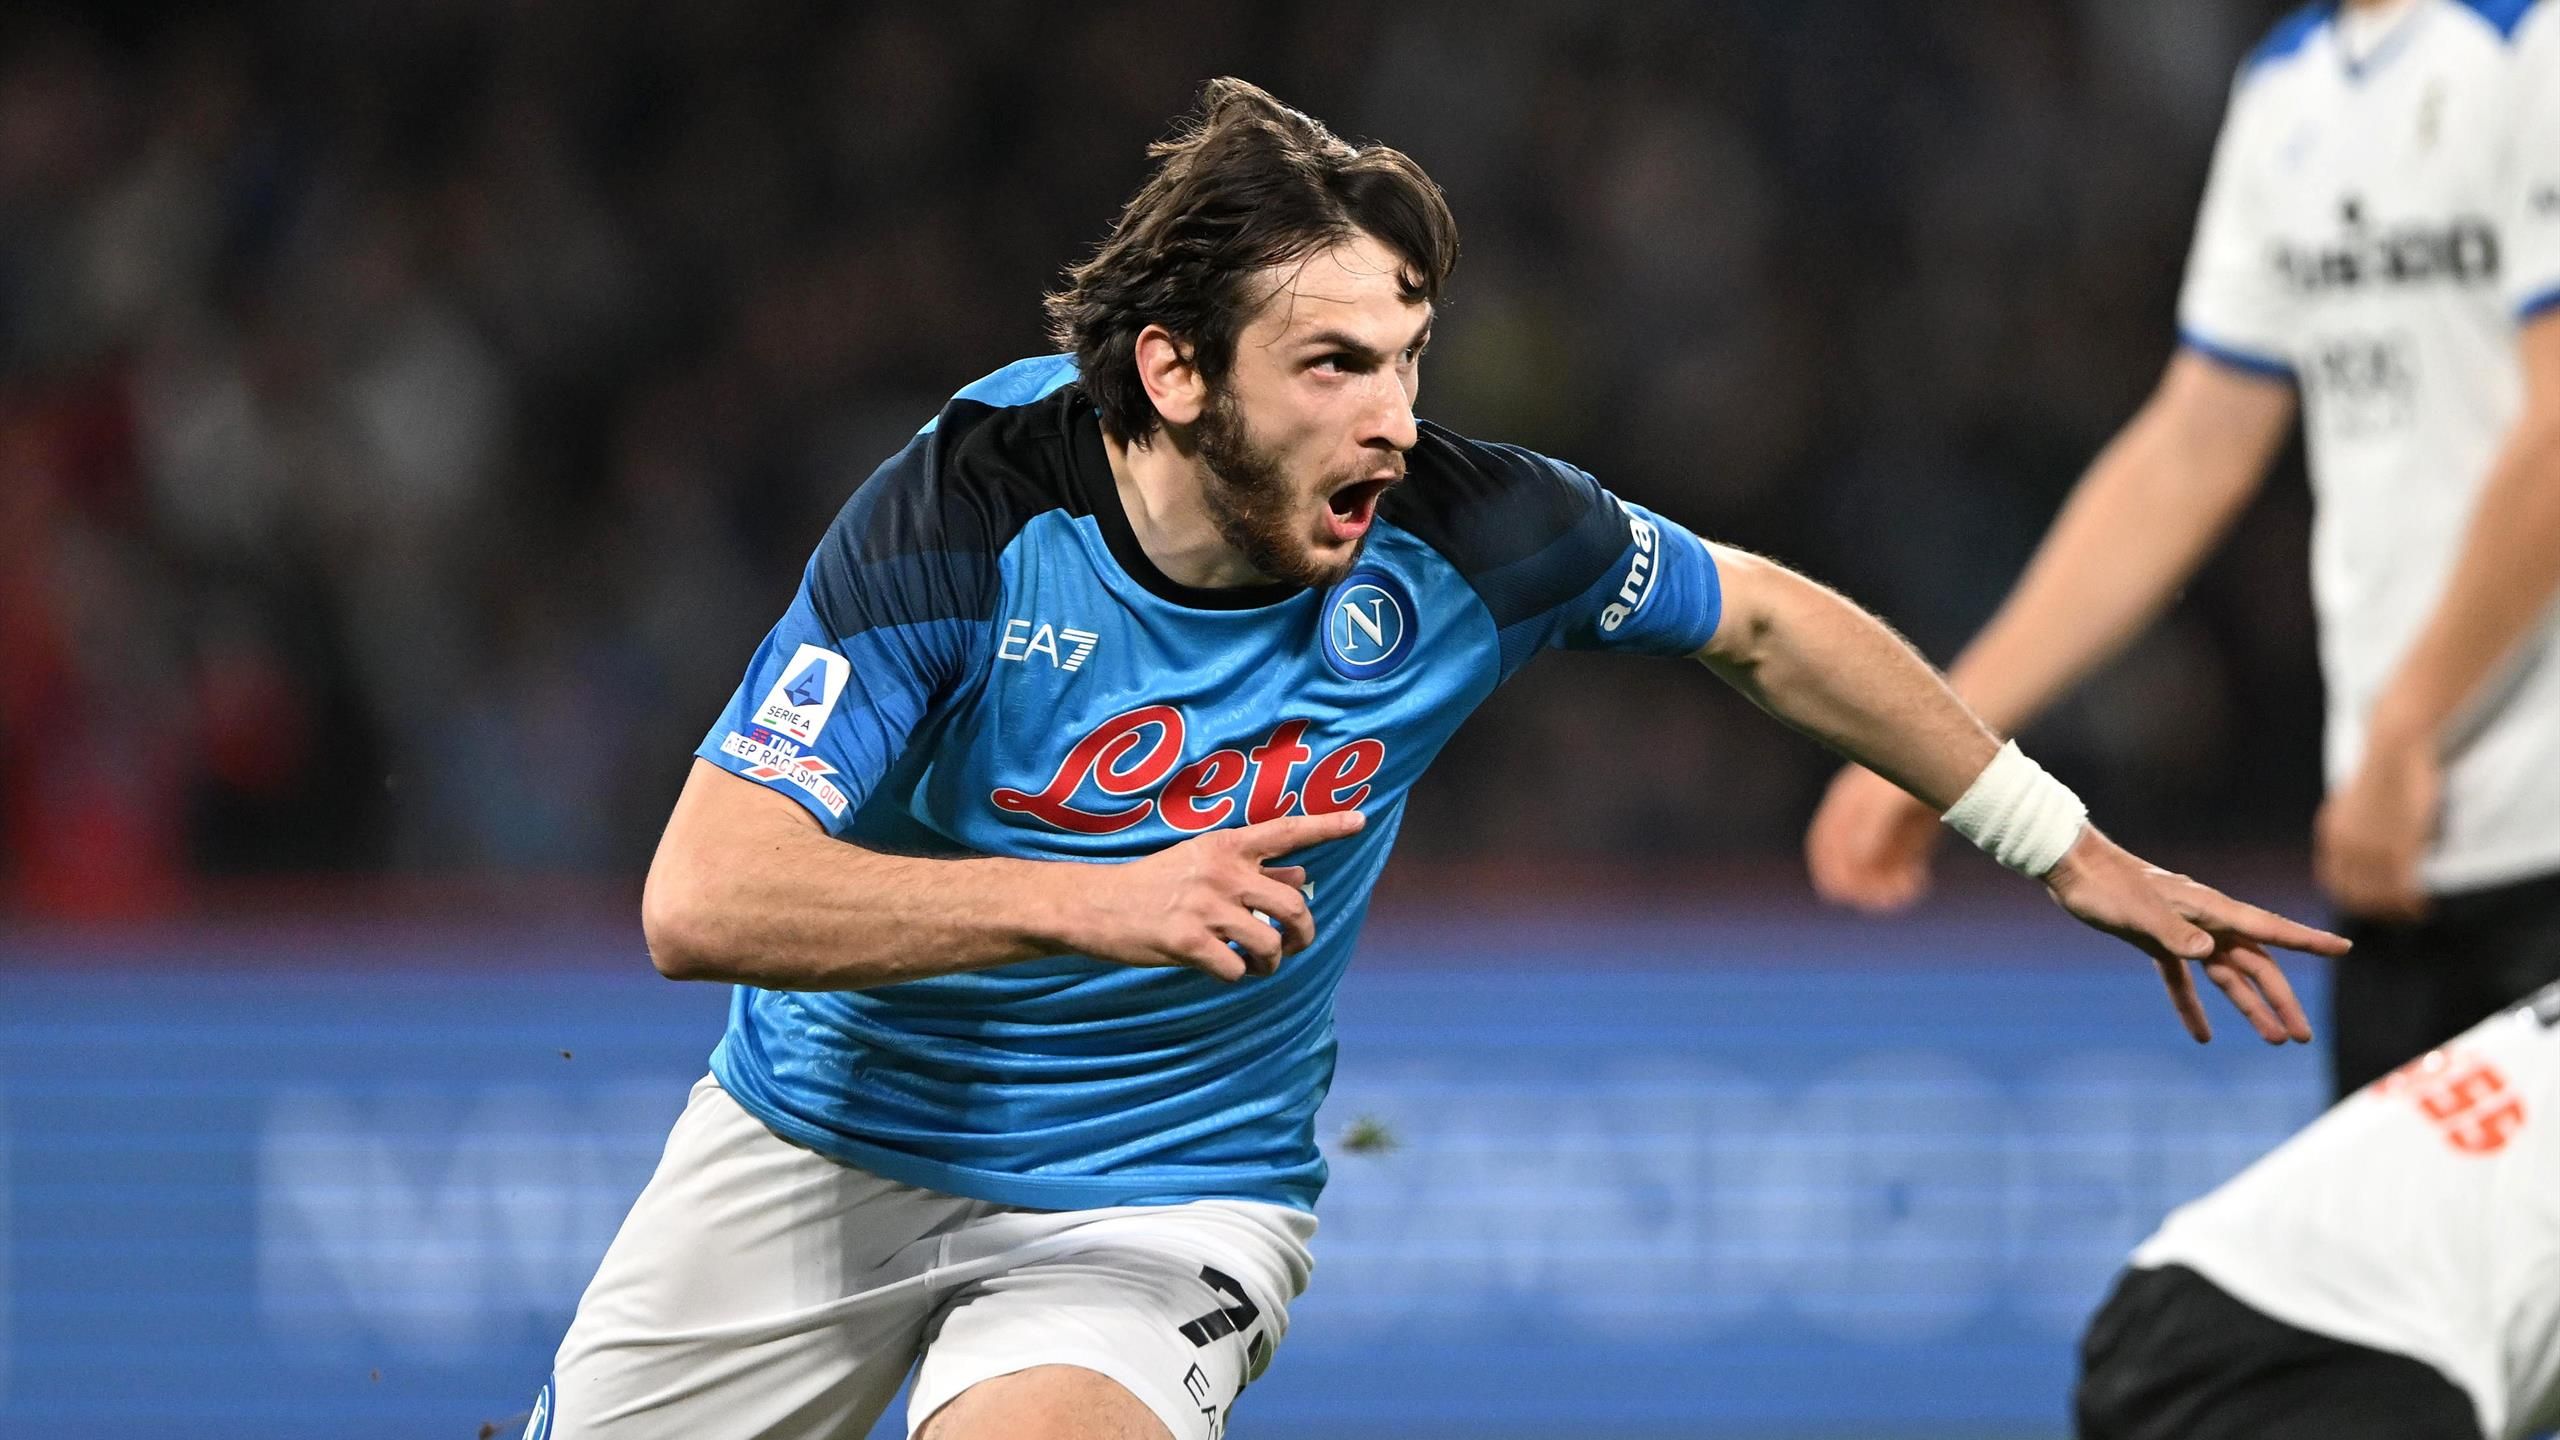 Napoli 2-0 Atalanta: Hosts regain 18-point advantage at top of A table after victory - Eurosport